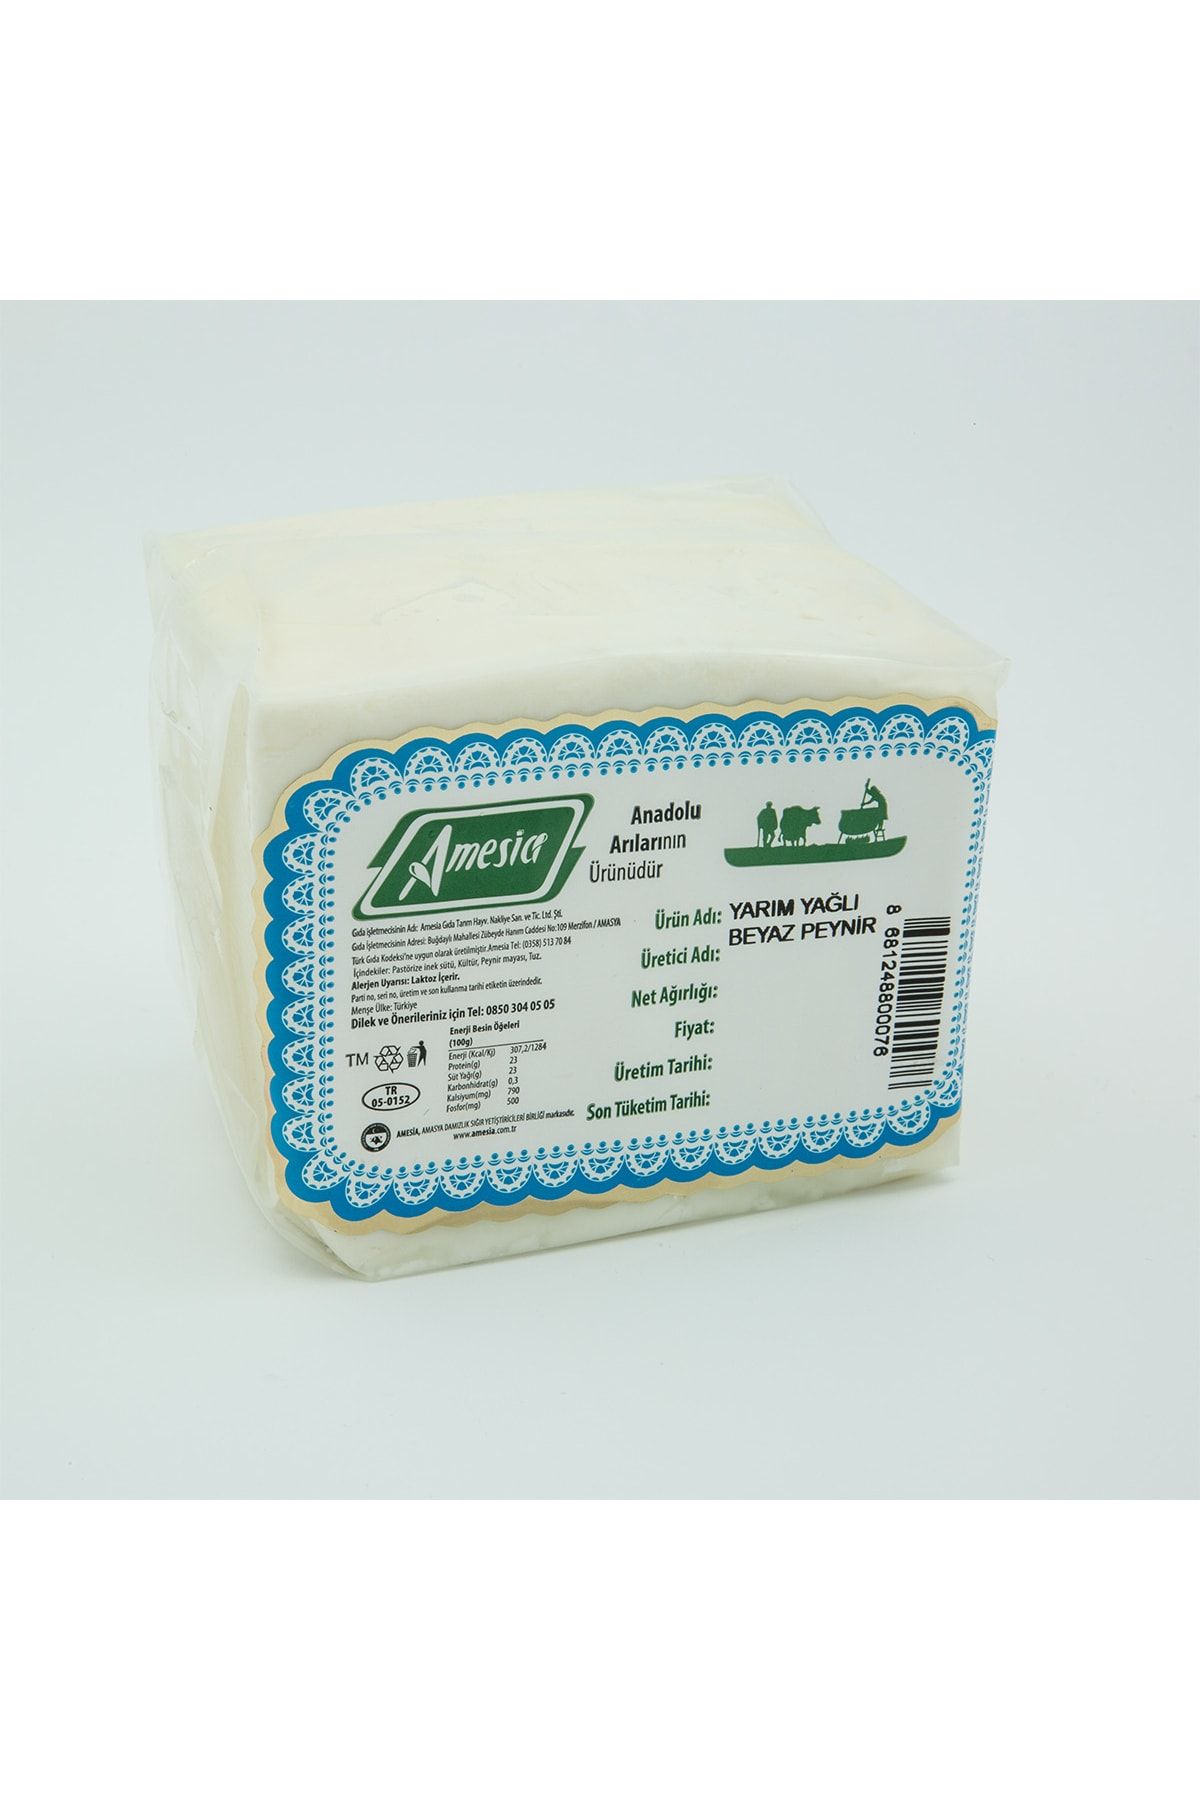 Amesia Yarım Yağlı Beyaz Peynir 600 G.